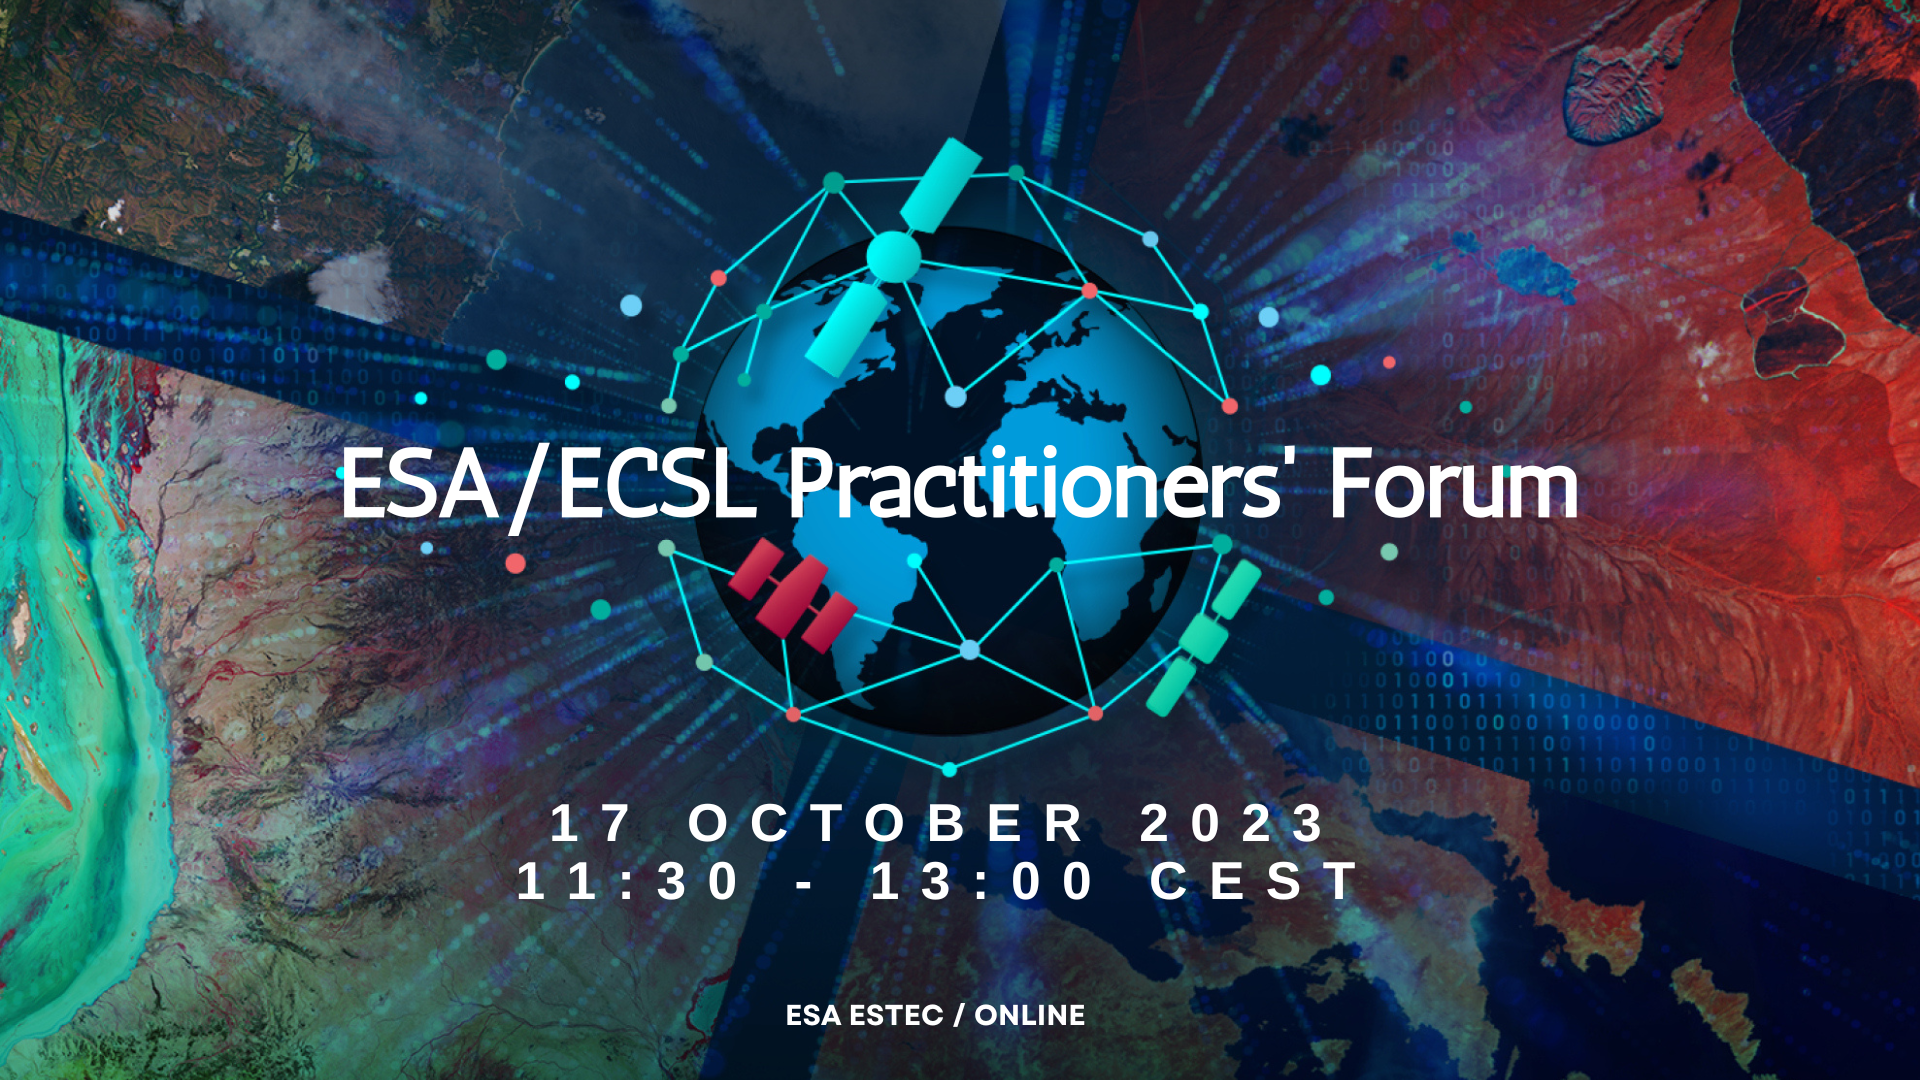 ESA/ECSL Practitioners' Forum 2023 